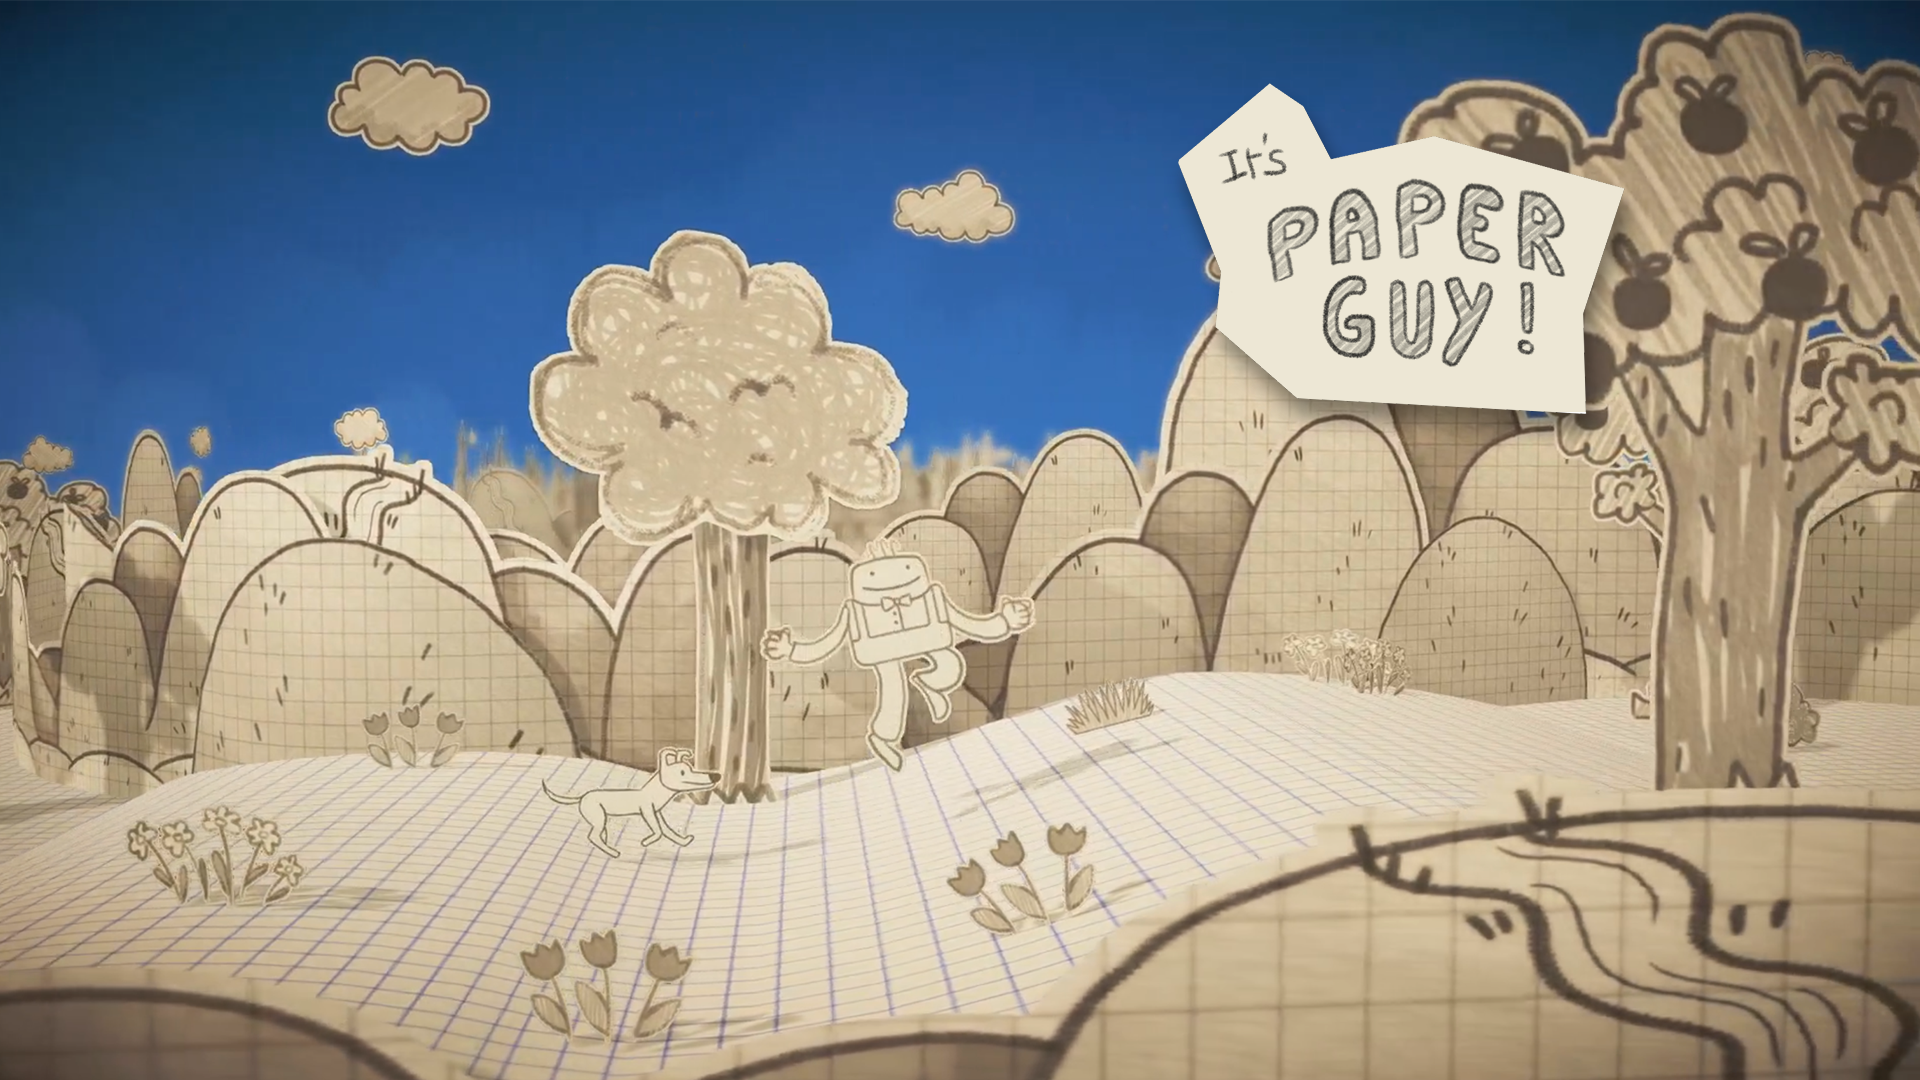 It's Paper Guy! by Paper Team, Rando-Malo (RegisRquoi), Togi, jane-pr,  KRAZY FOXXX, Jonas Dutouquet, Marc Enciso